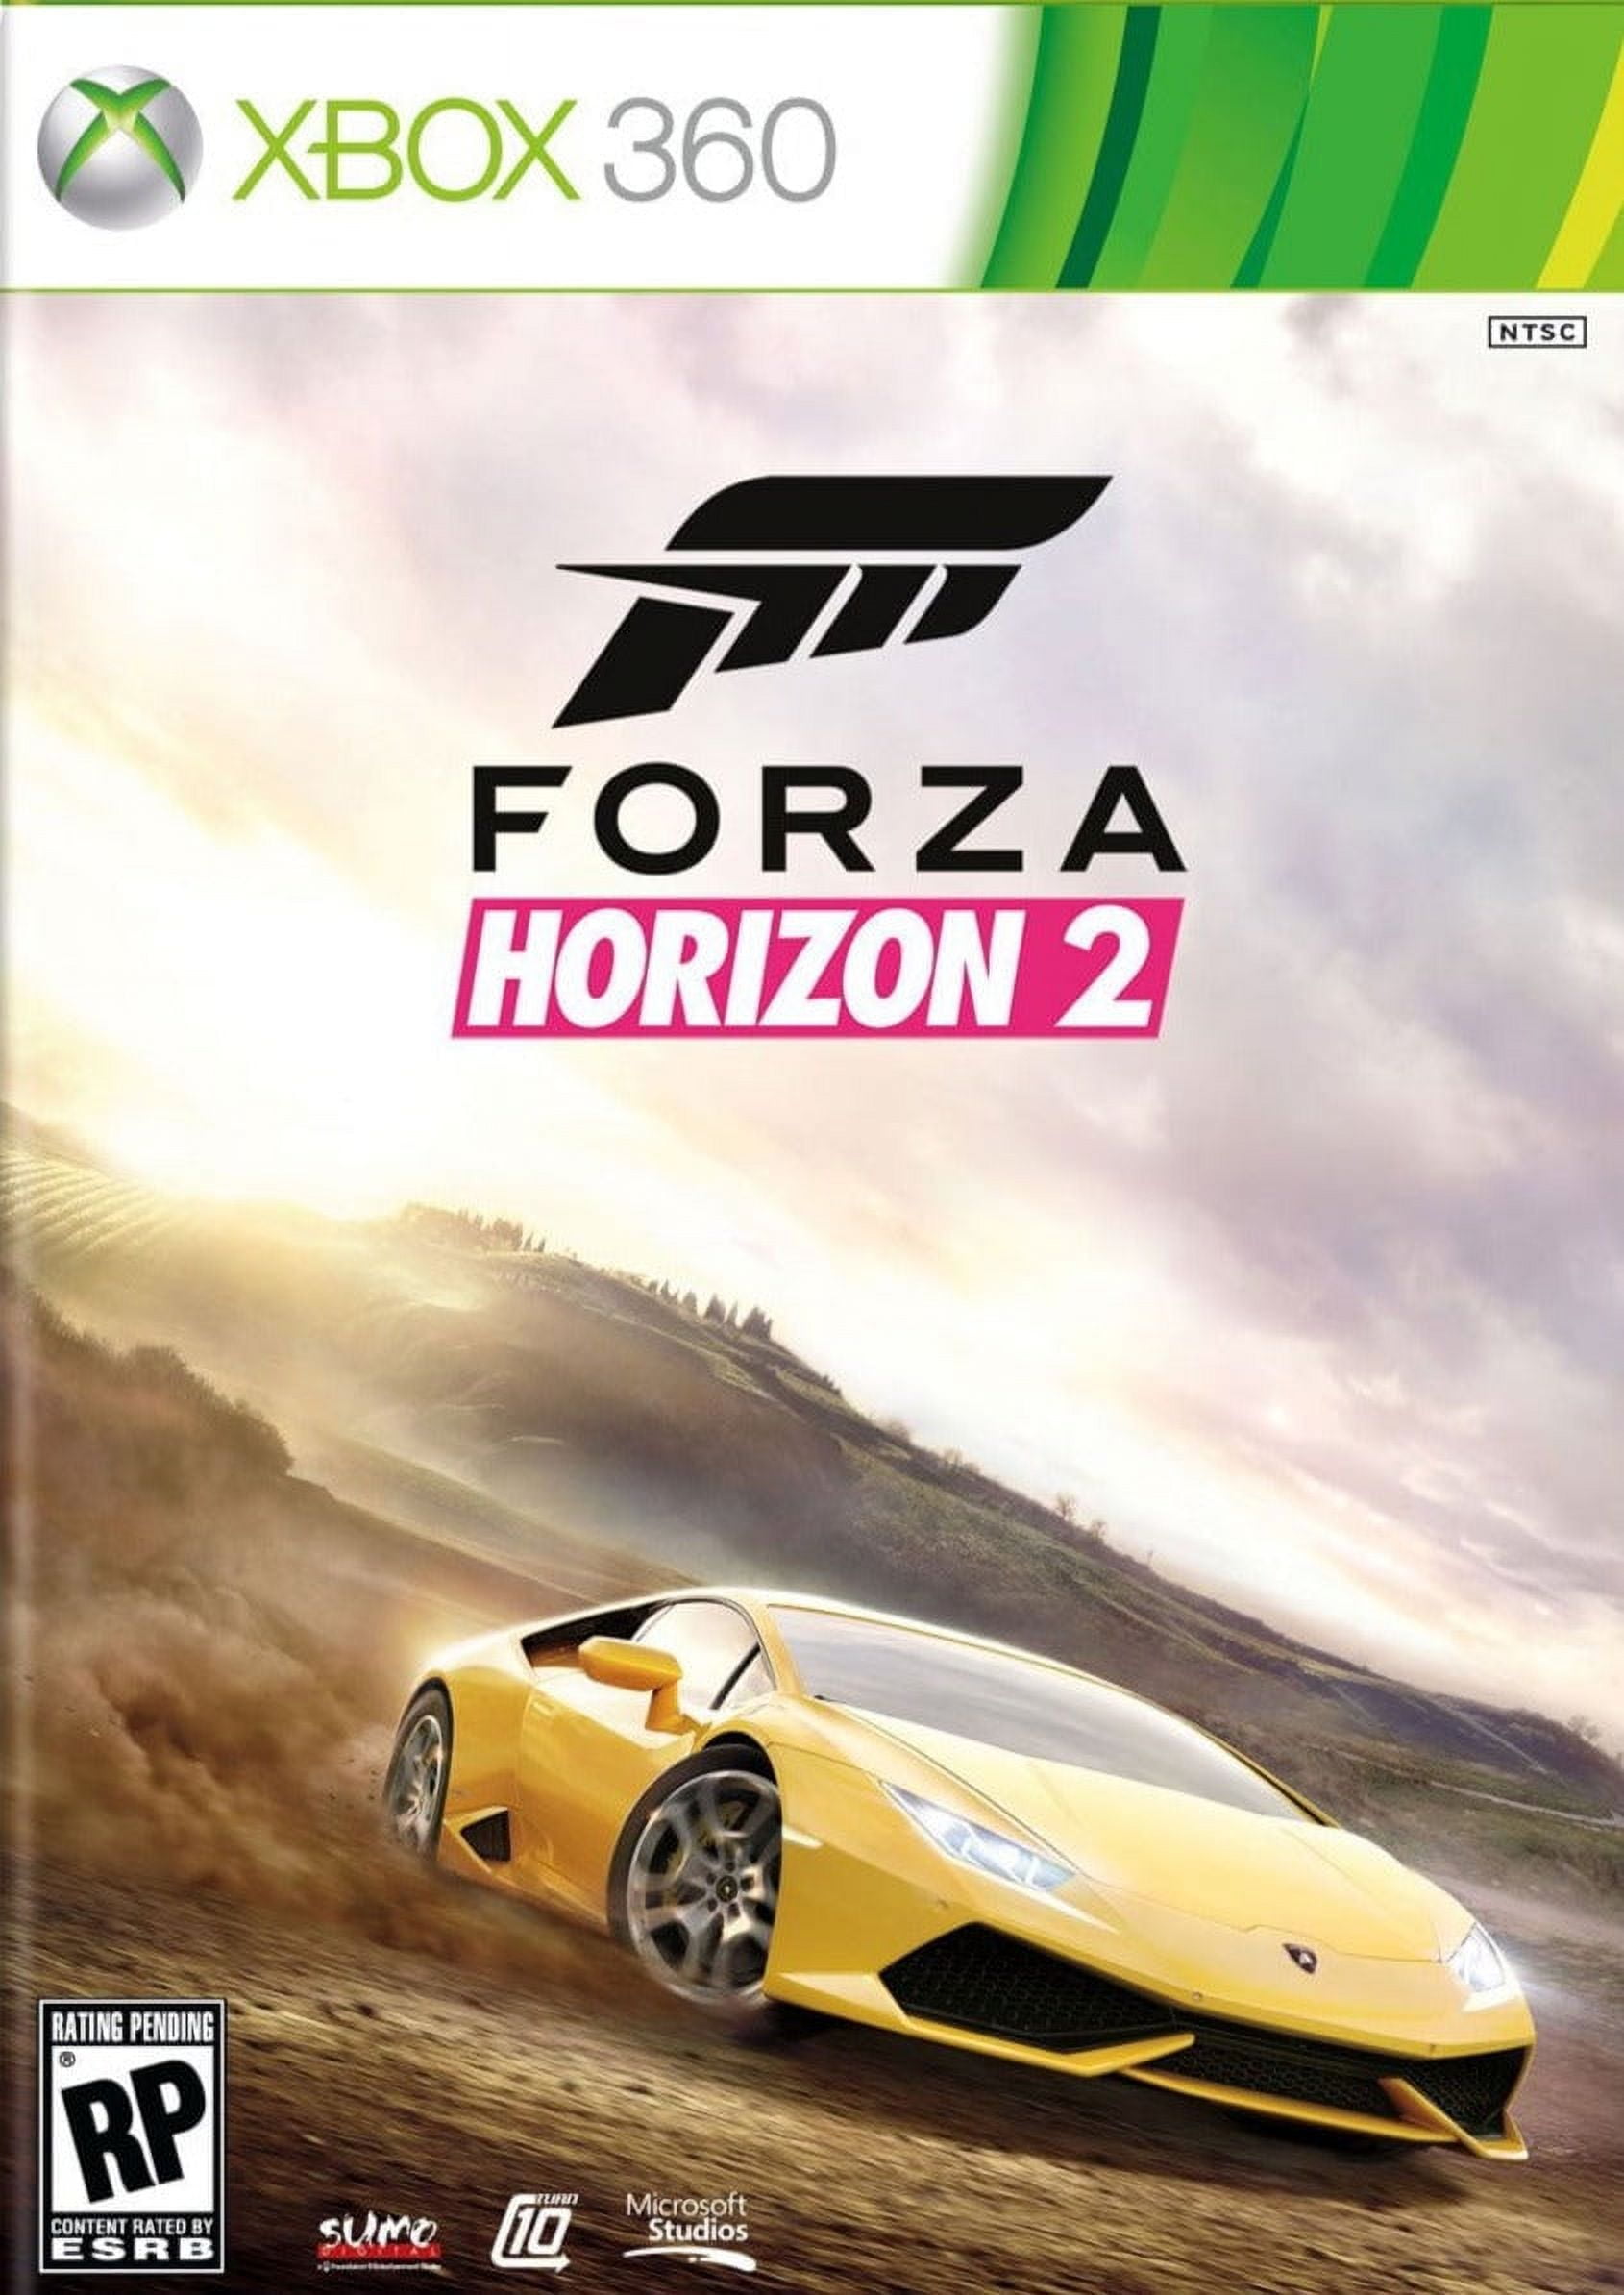 Forza Horizon 5 PS4 Full Version Free Download - EPN